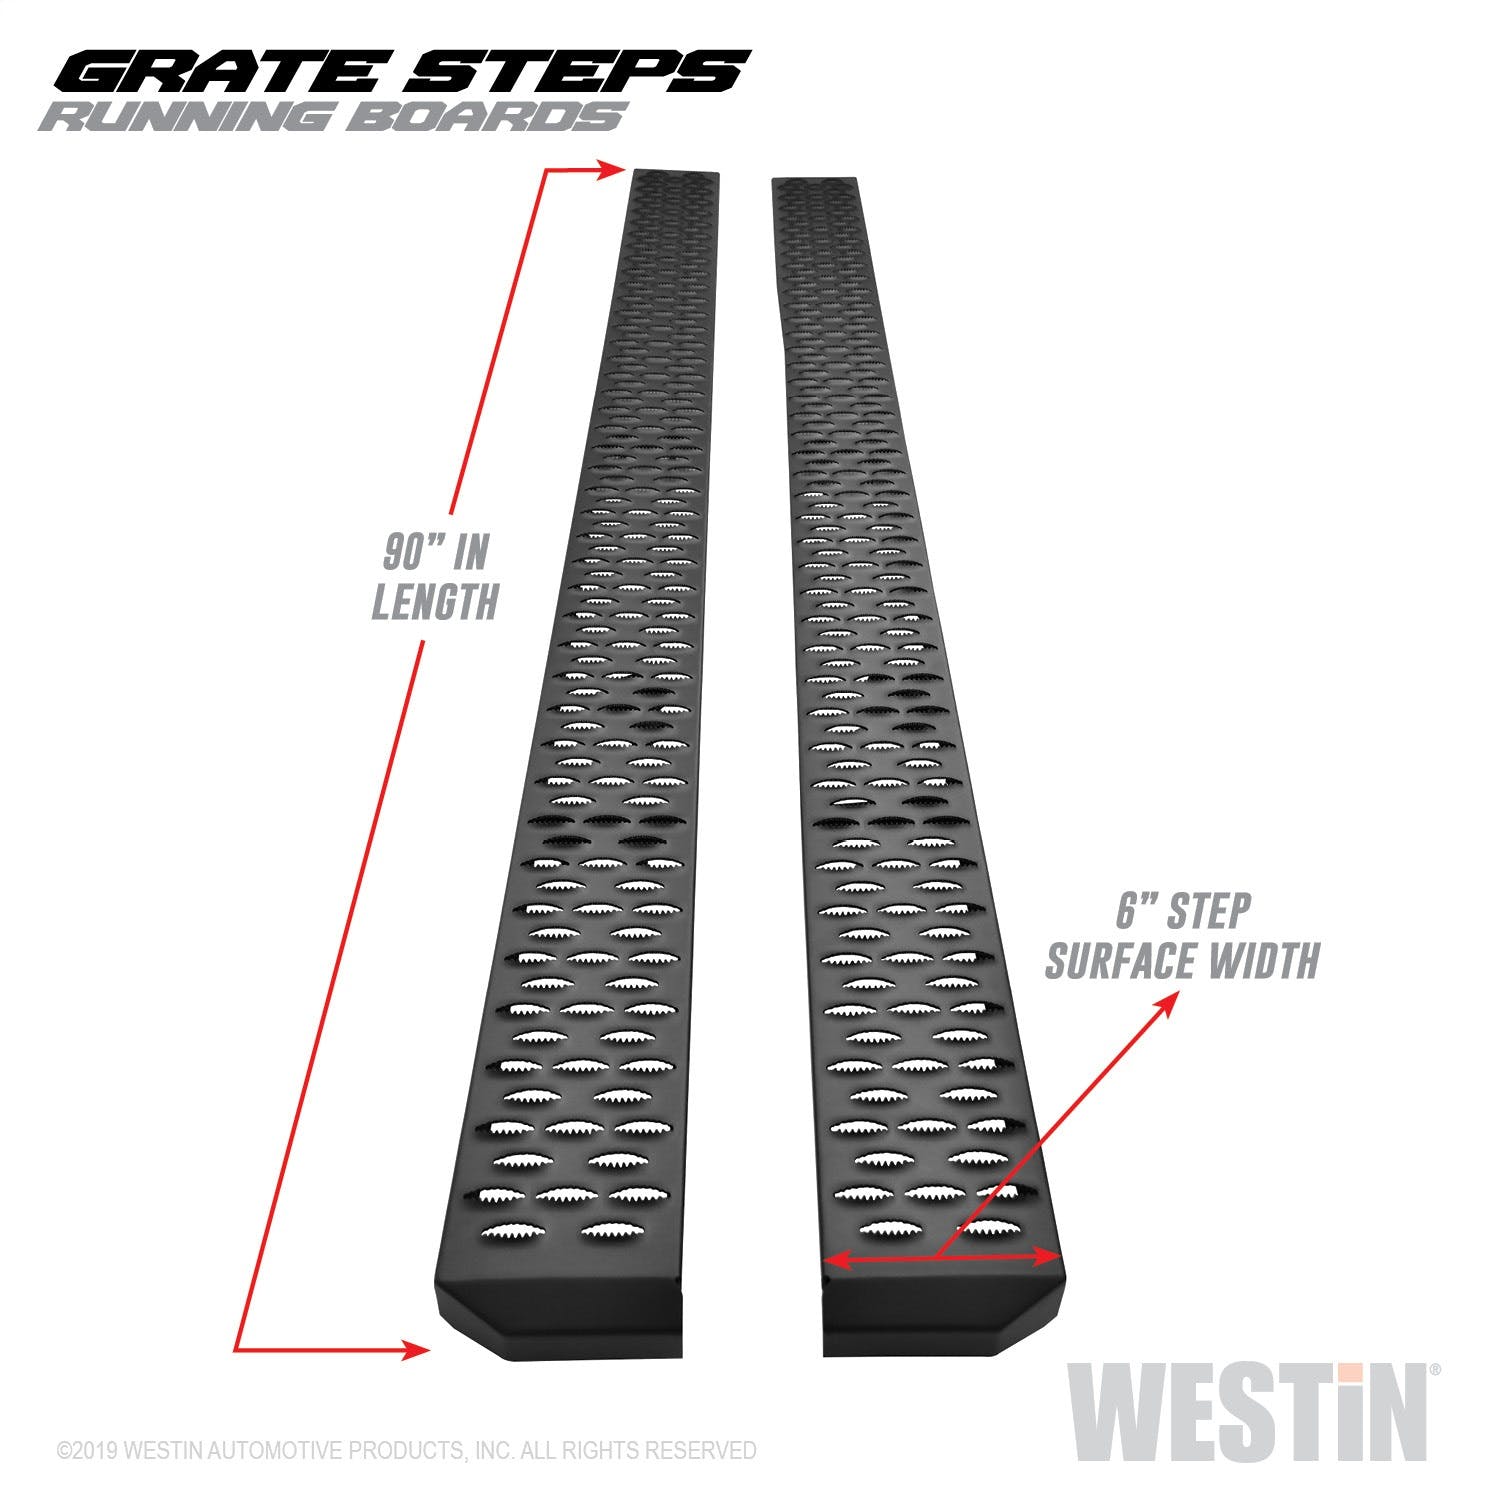 Westin Automotive 27-74745 Grate Steps Running Boards Textured Black